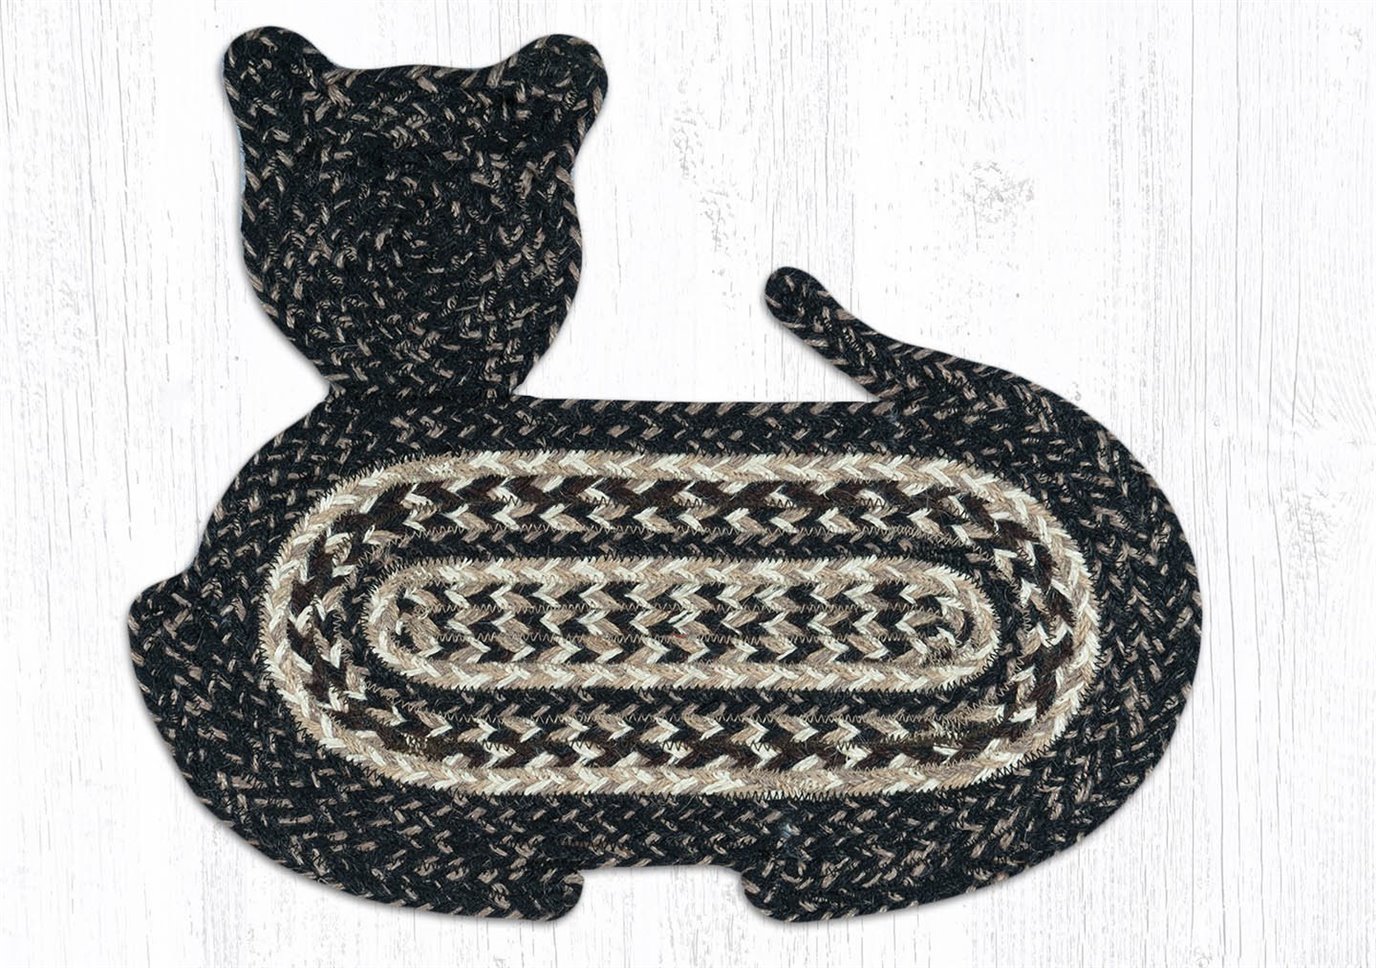 Black + Tan Braided Cat Shaped Rug 14.5"x19.5"